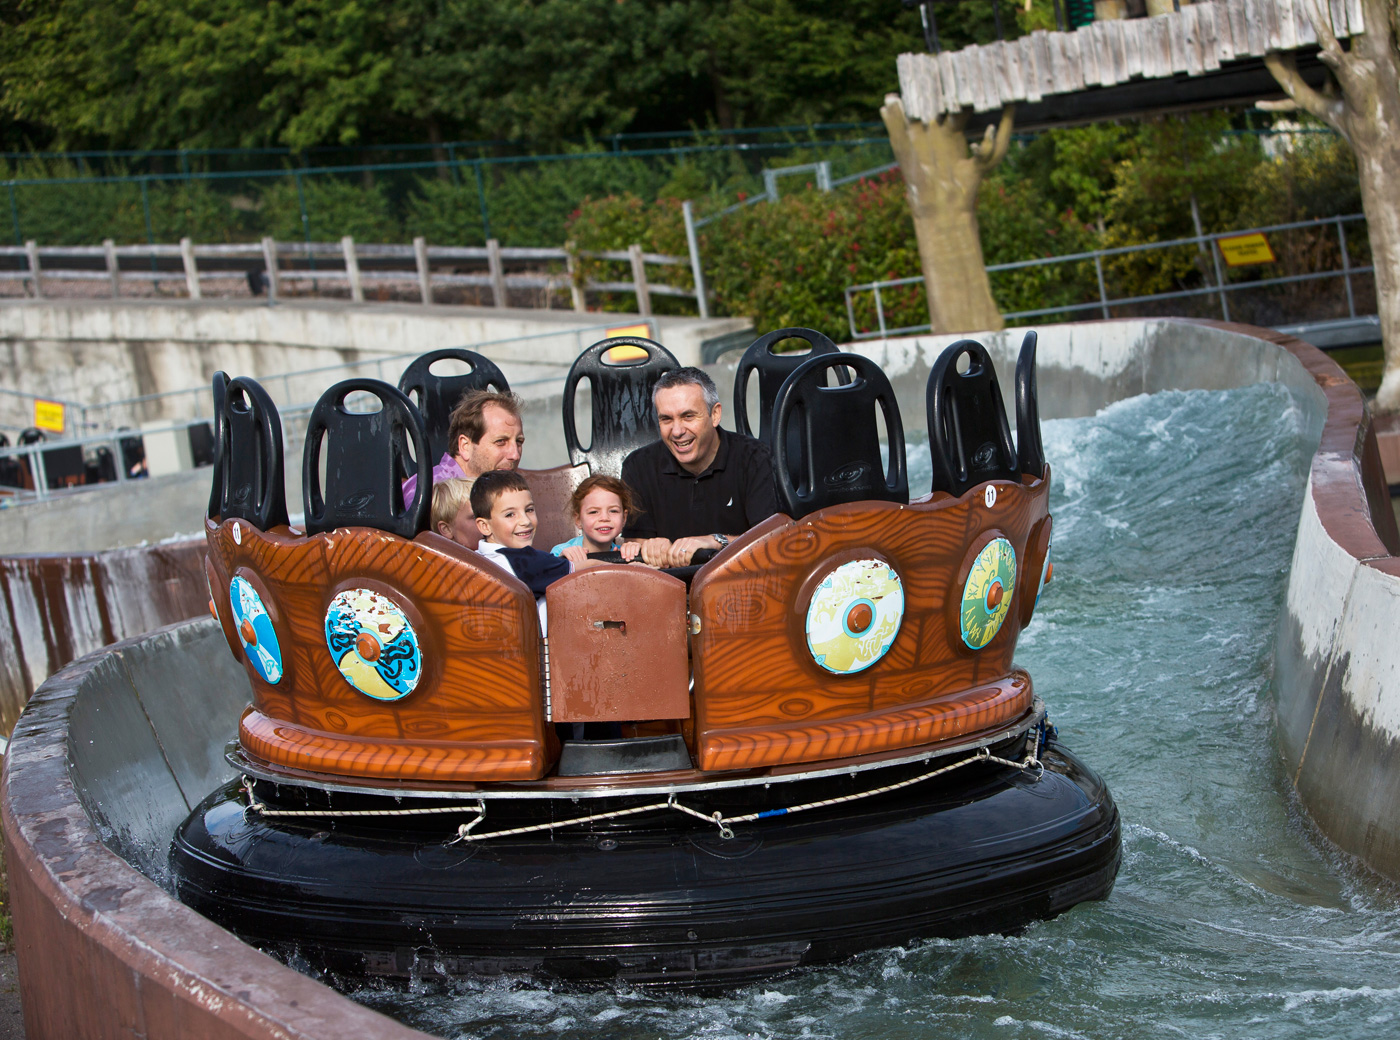 Families getting wet on Viking River Splash rapids ride